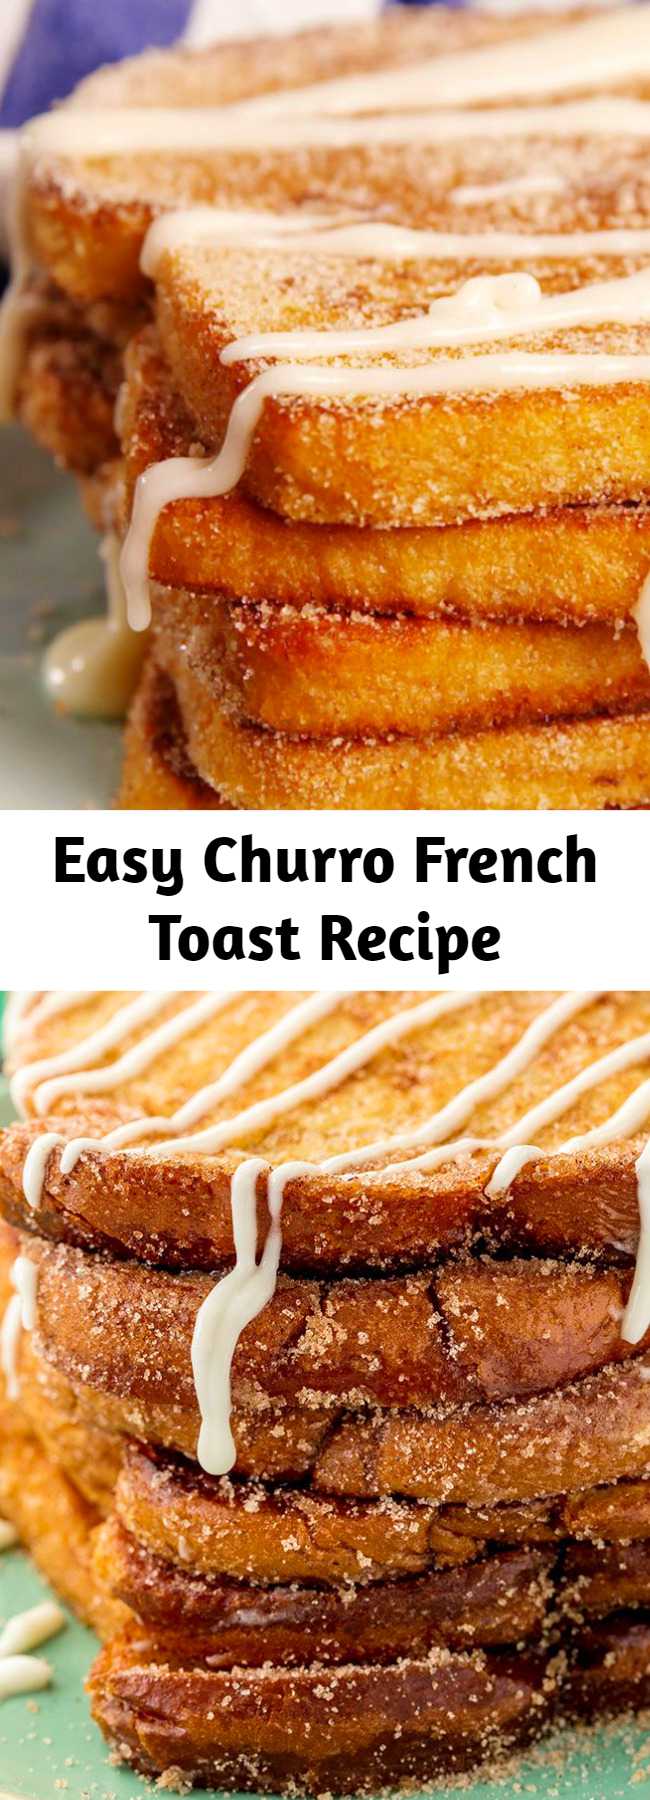 Churro-fy your breakfast! 😏 #easy #recipe #churro #frenchtoast #breakfast #cinnamon #sugar #brunch